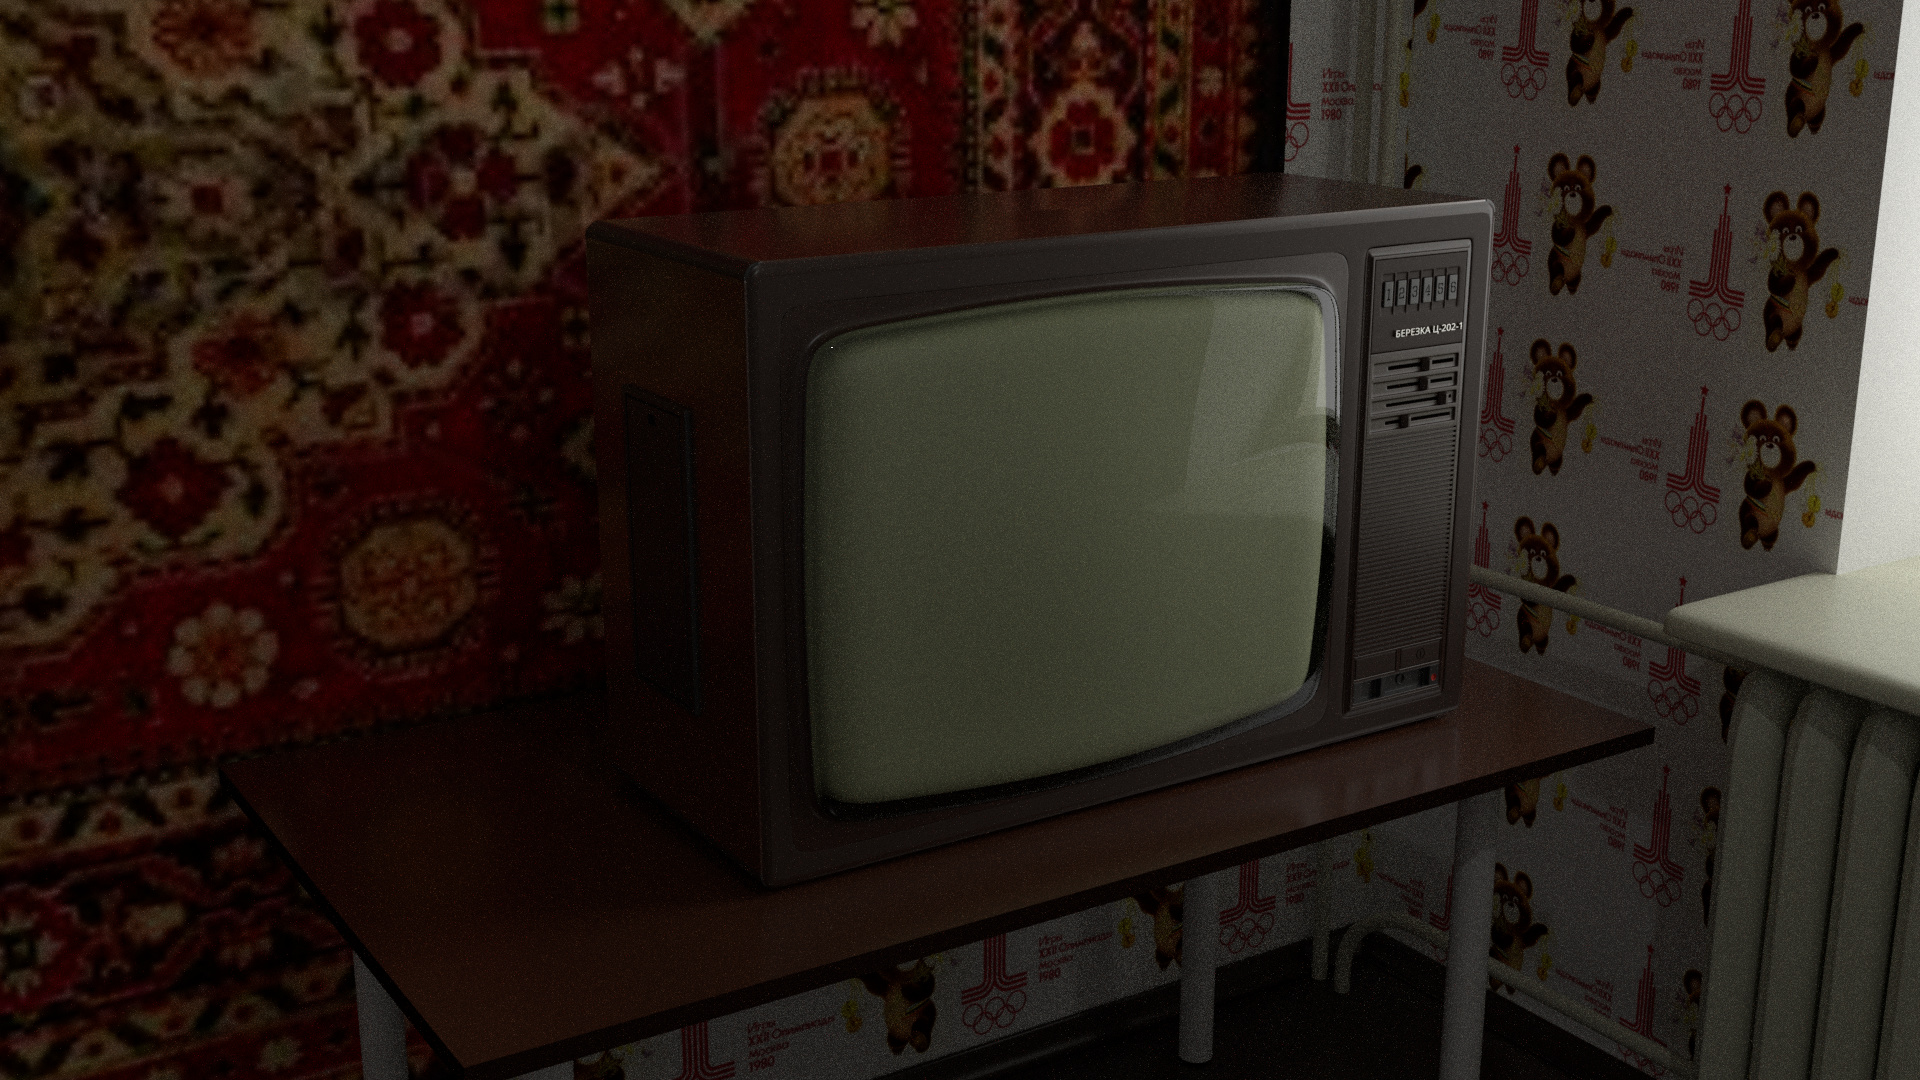 Куплю телевизор старый оскол. Телевизор Березка ц-202. Цветной телевизор берёзка ц 202. Телевизор Березка ц-208. Телевизор Рубин ц 202.